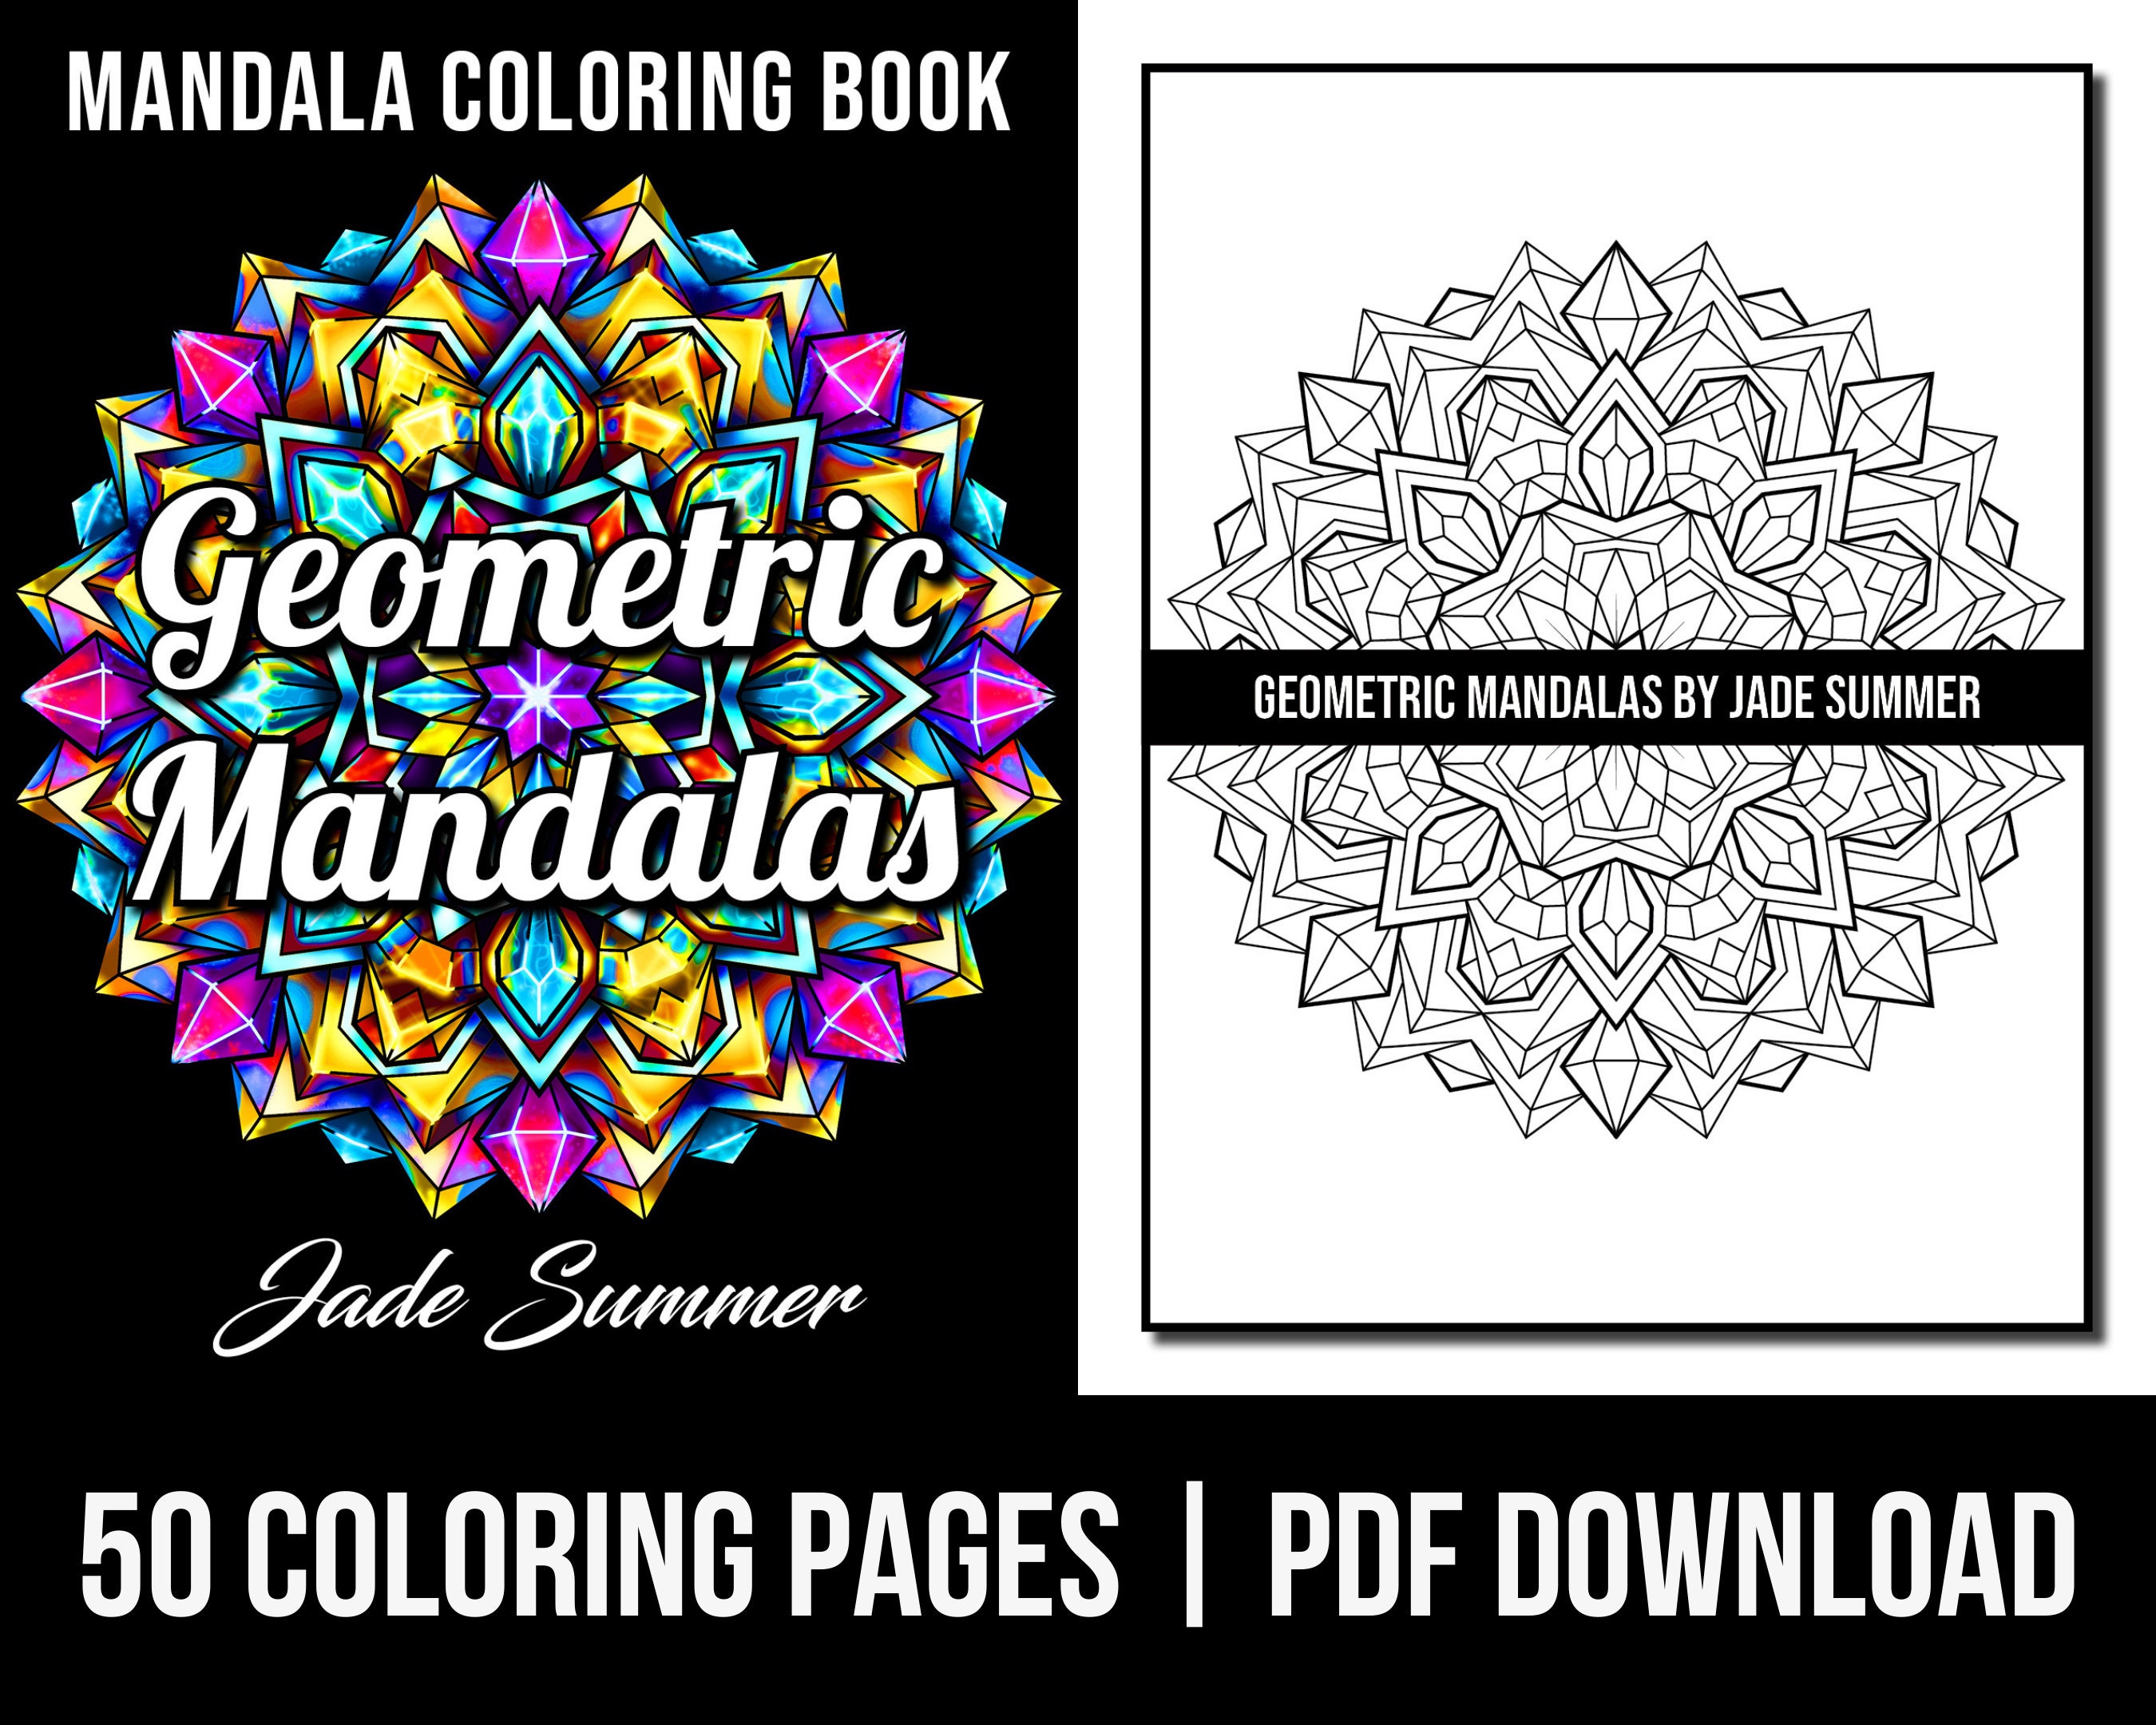 Mandala Colouring Book For Adults: 50 design amazing mandala's for